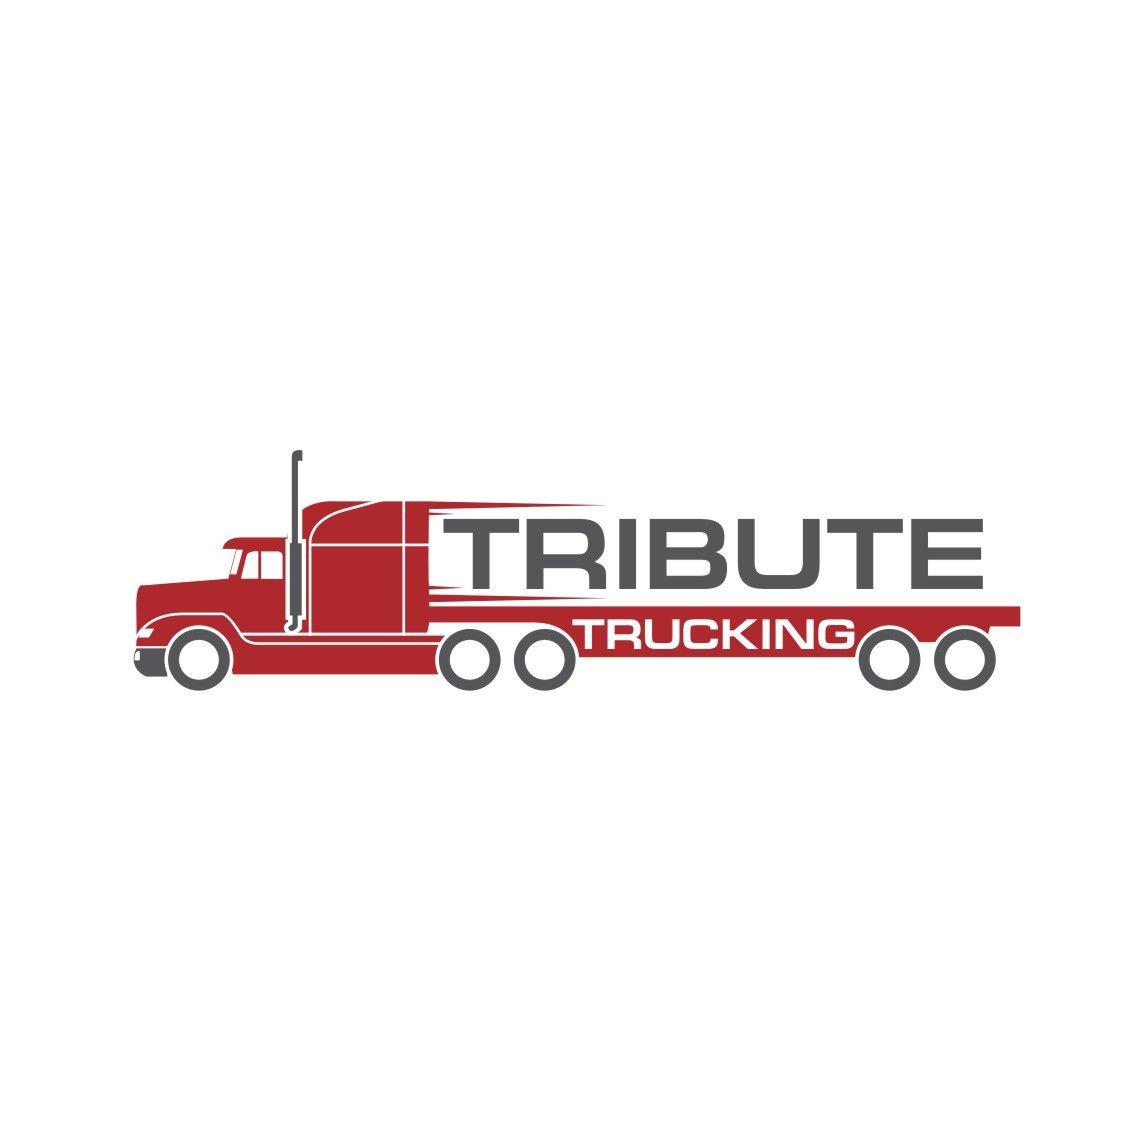 Creative Truck Company Logo - Masculine, Upmarket, It Company Logo Design for Tribute Trucking